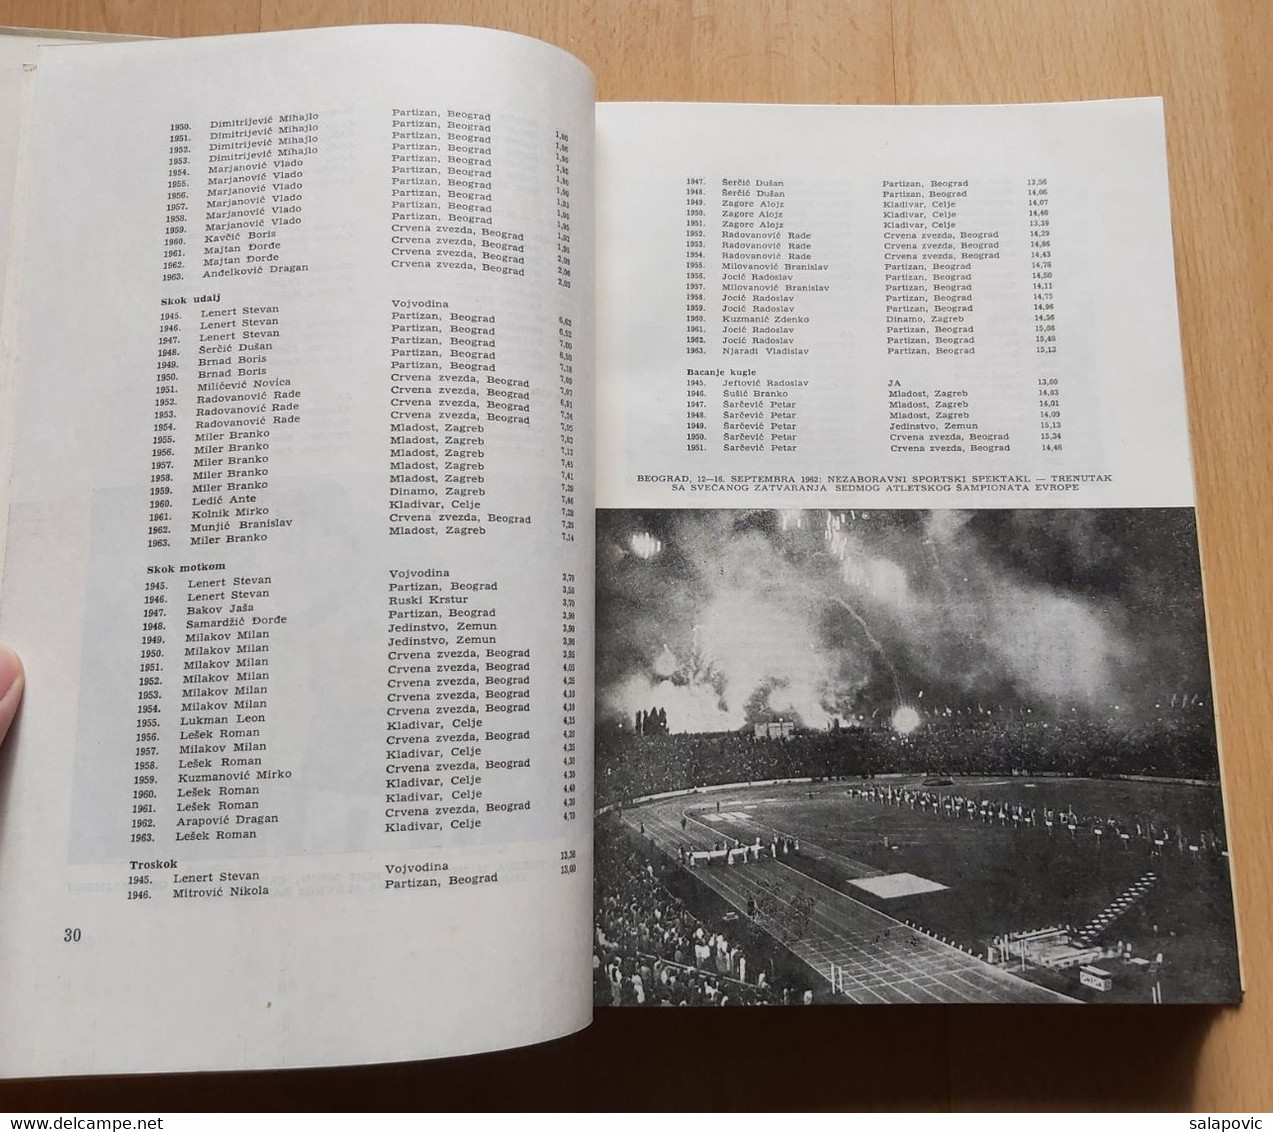 Almanah Jugoslovenskog Sporta 1943 - 1963  Almanac Of Yugoslav Sports - Livres